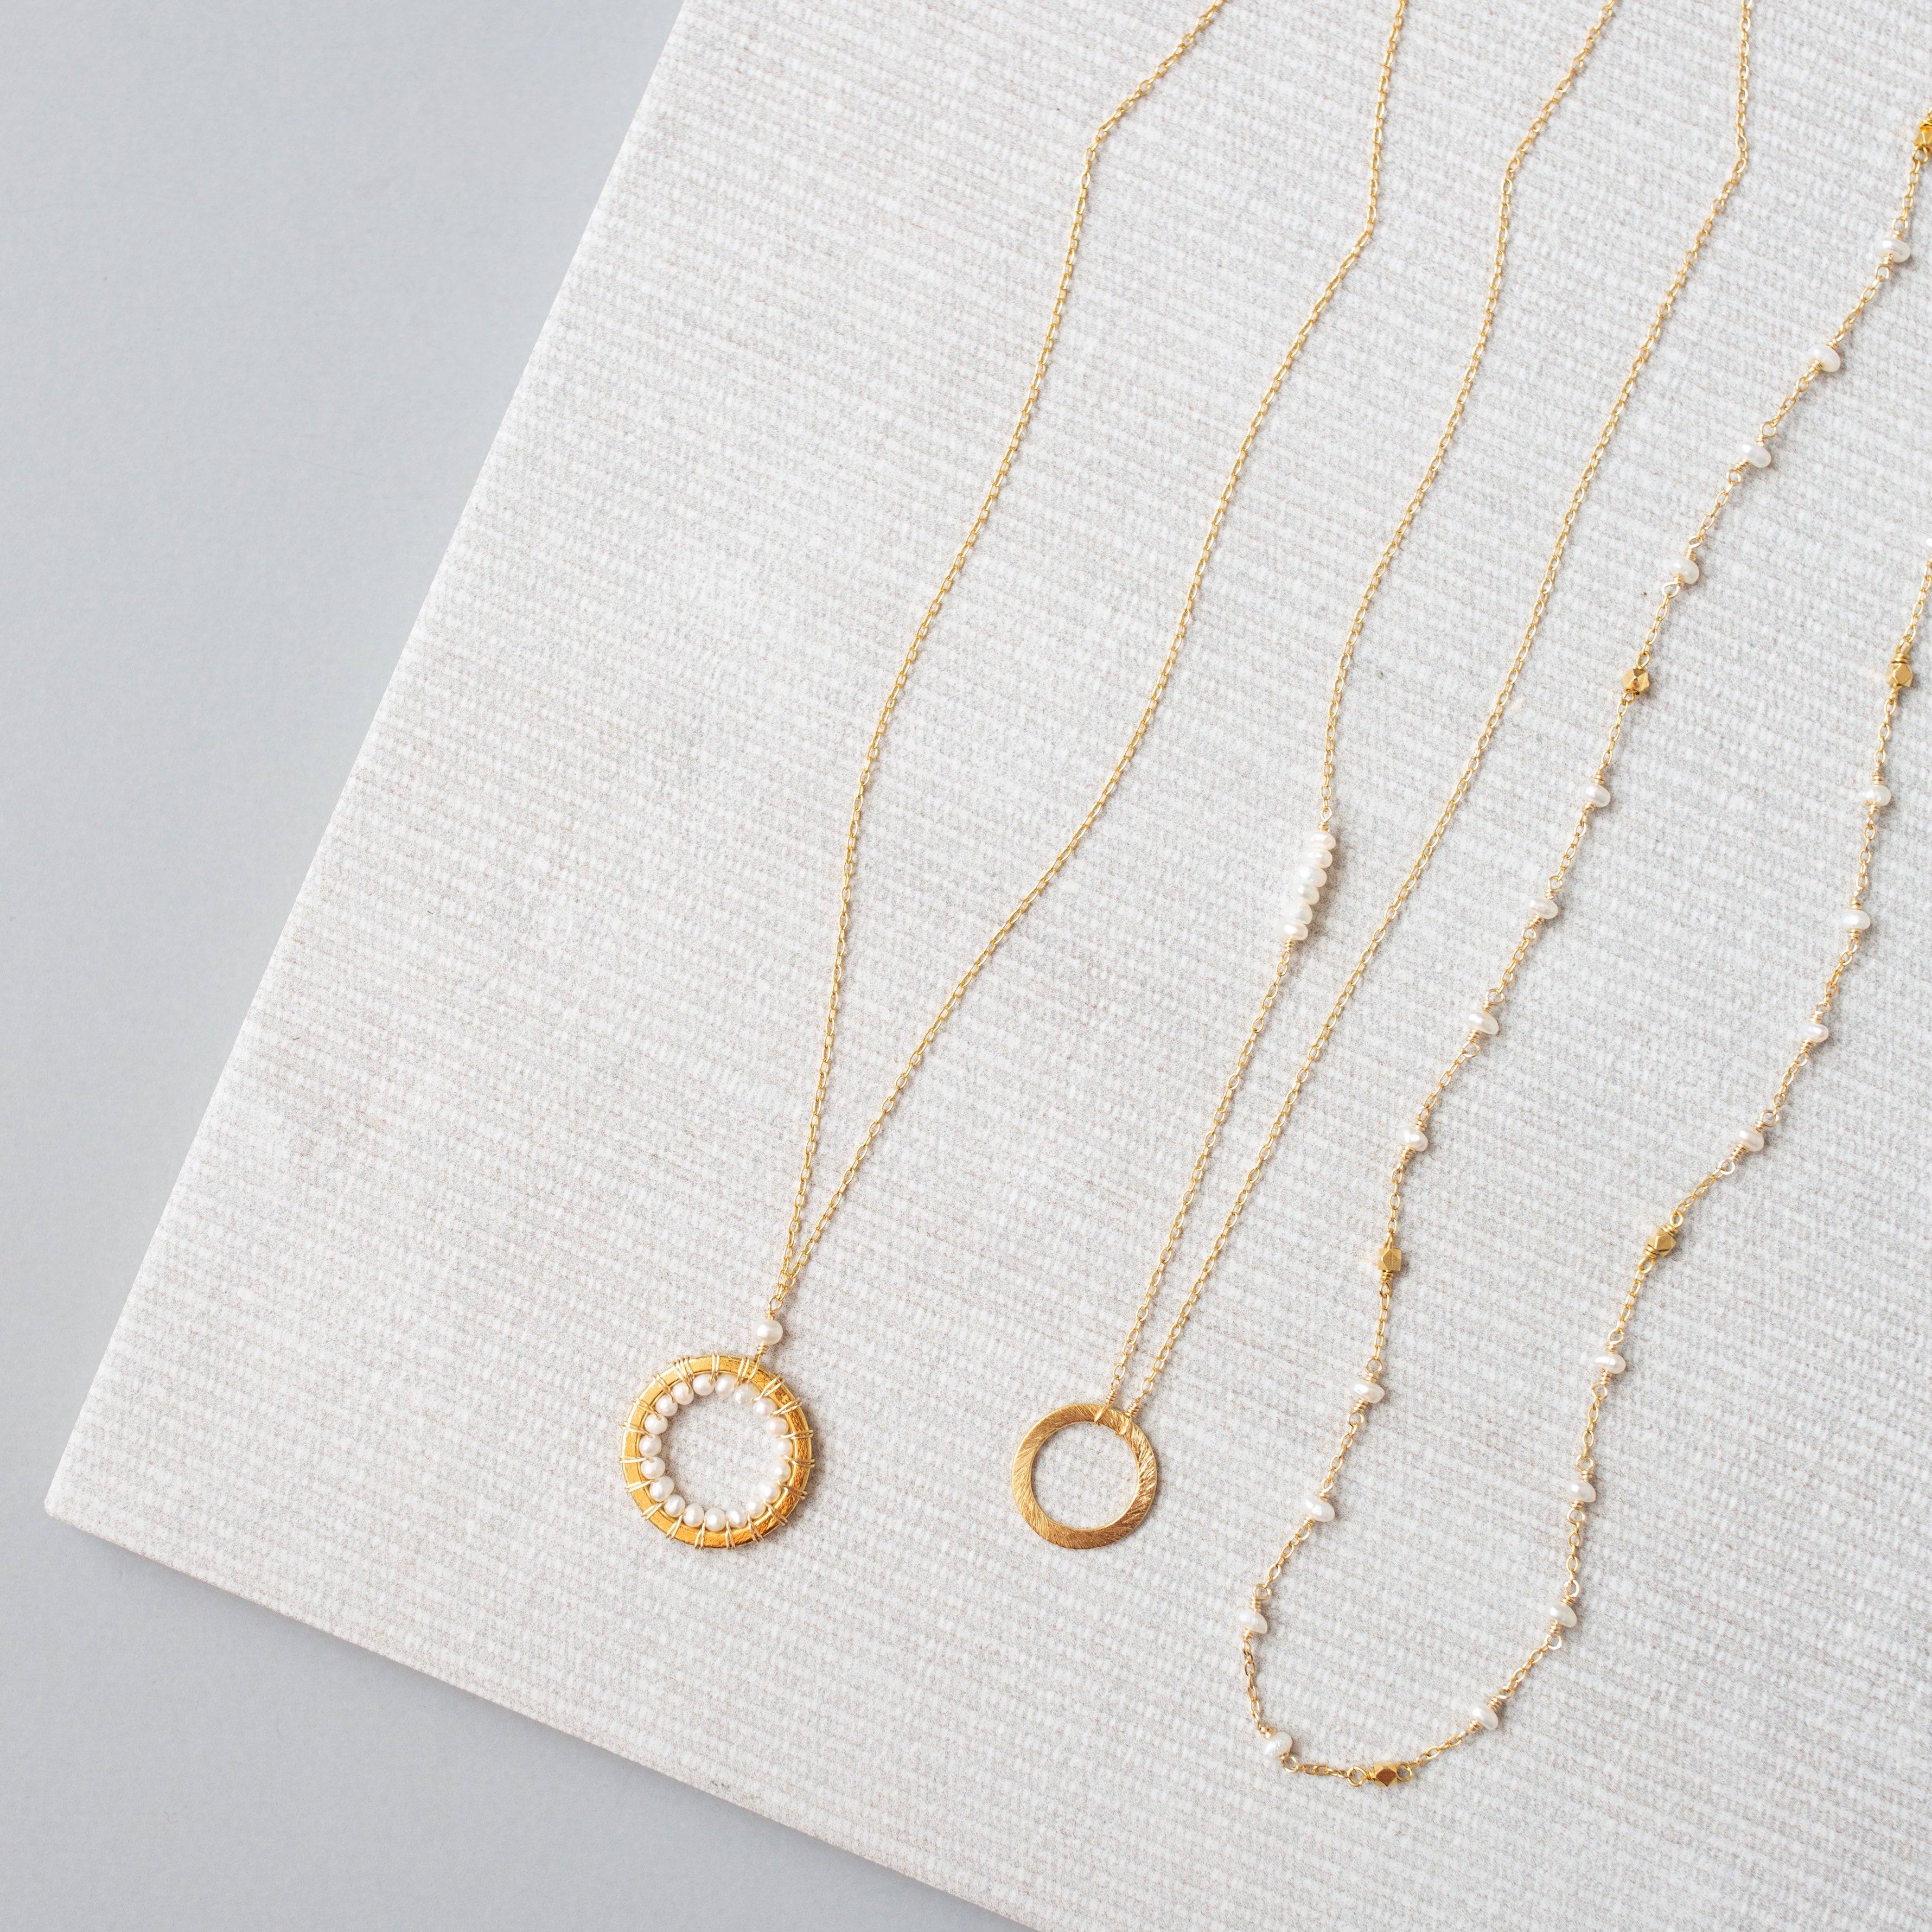 Elegant Modern Circle Pearl Necklace